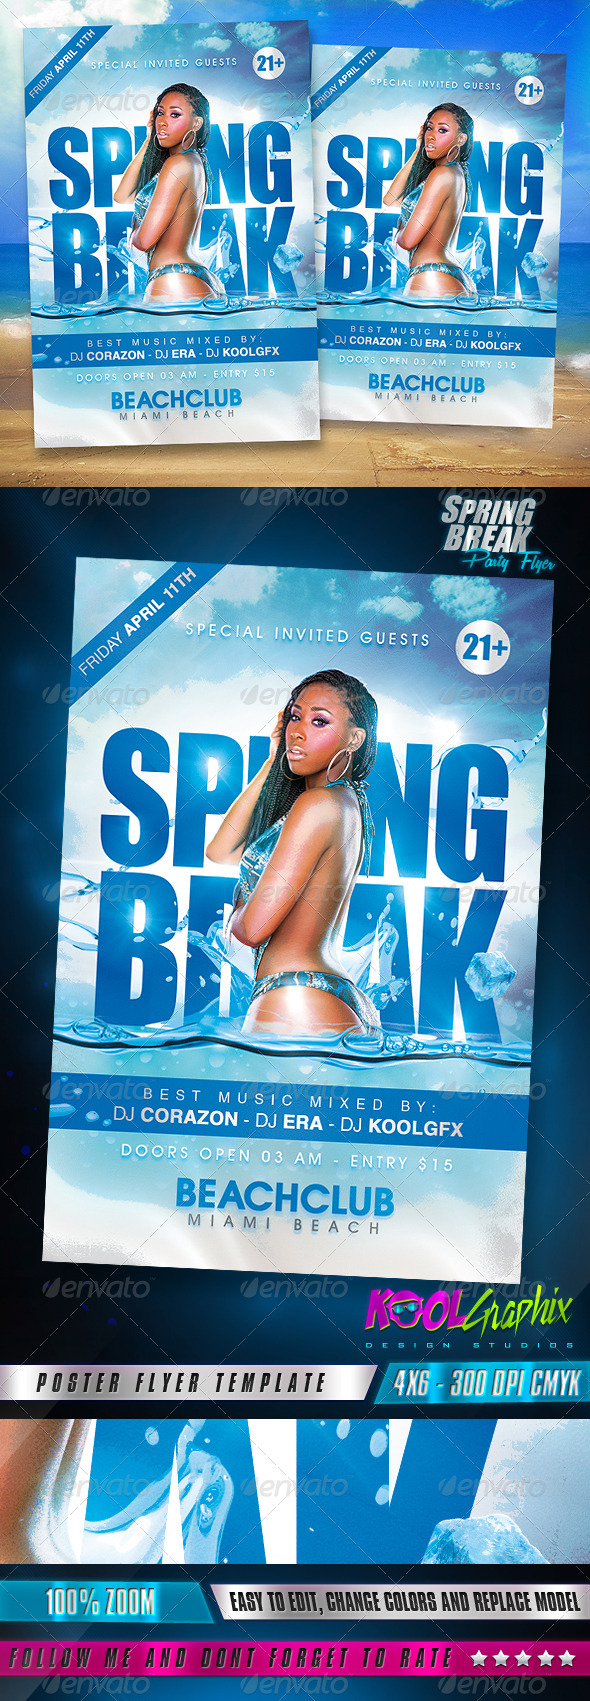 Spring Break Party Flyer